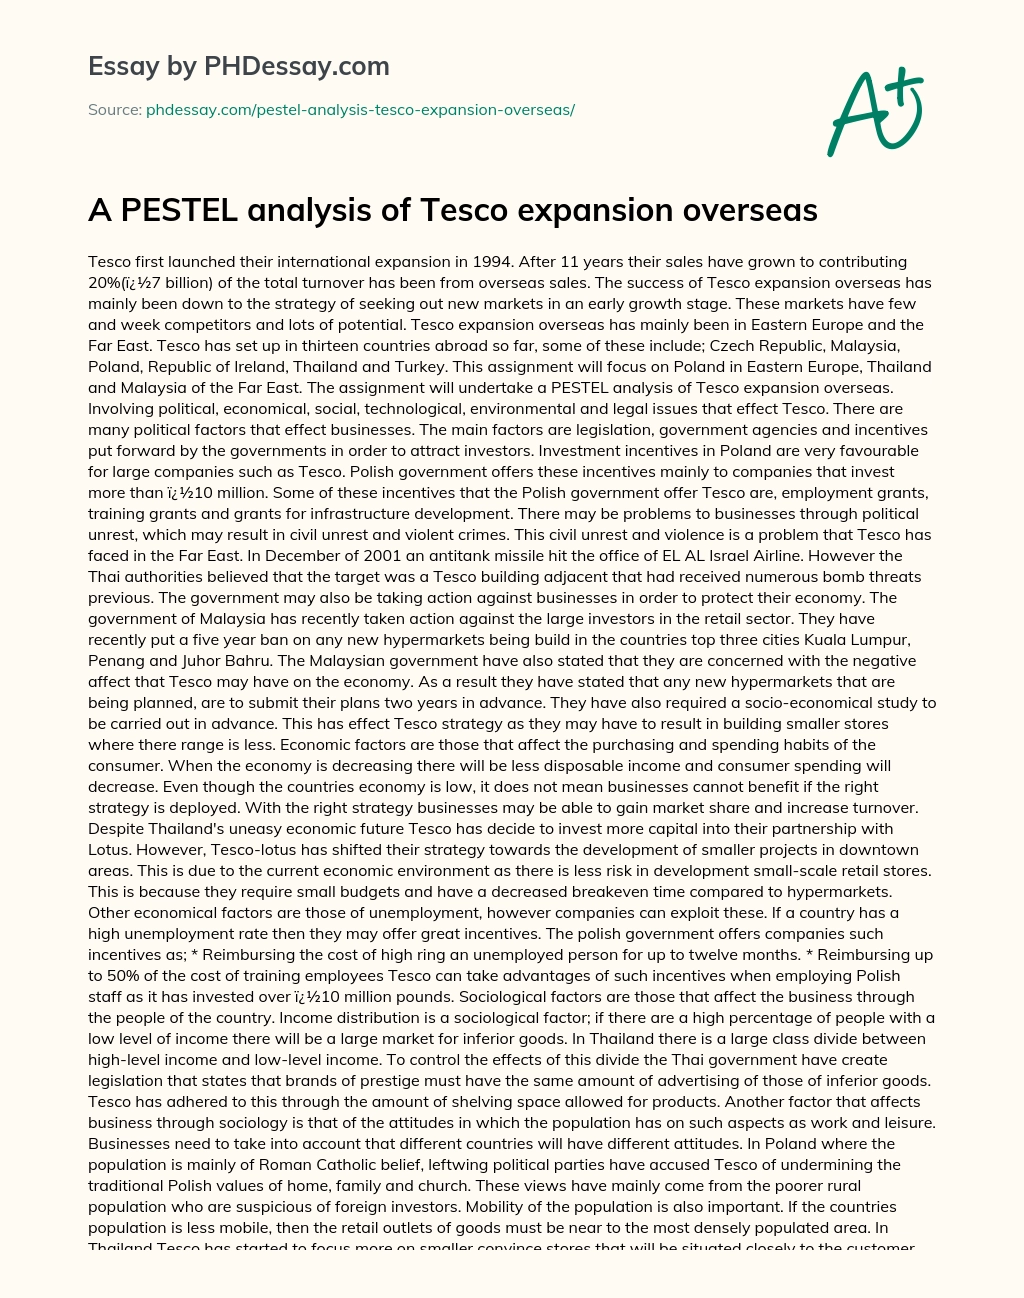 A PESTEL Analysis of Tesco Expansion Overseas essay